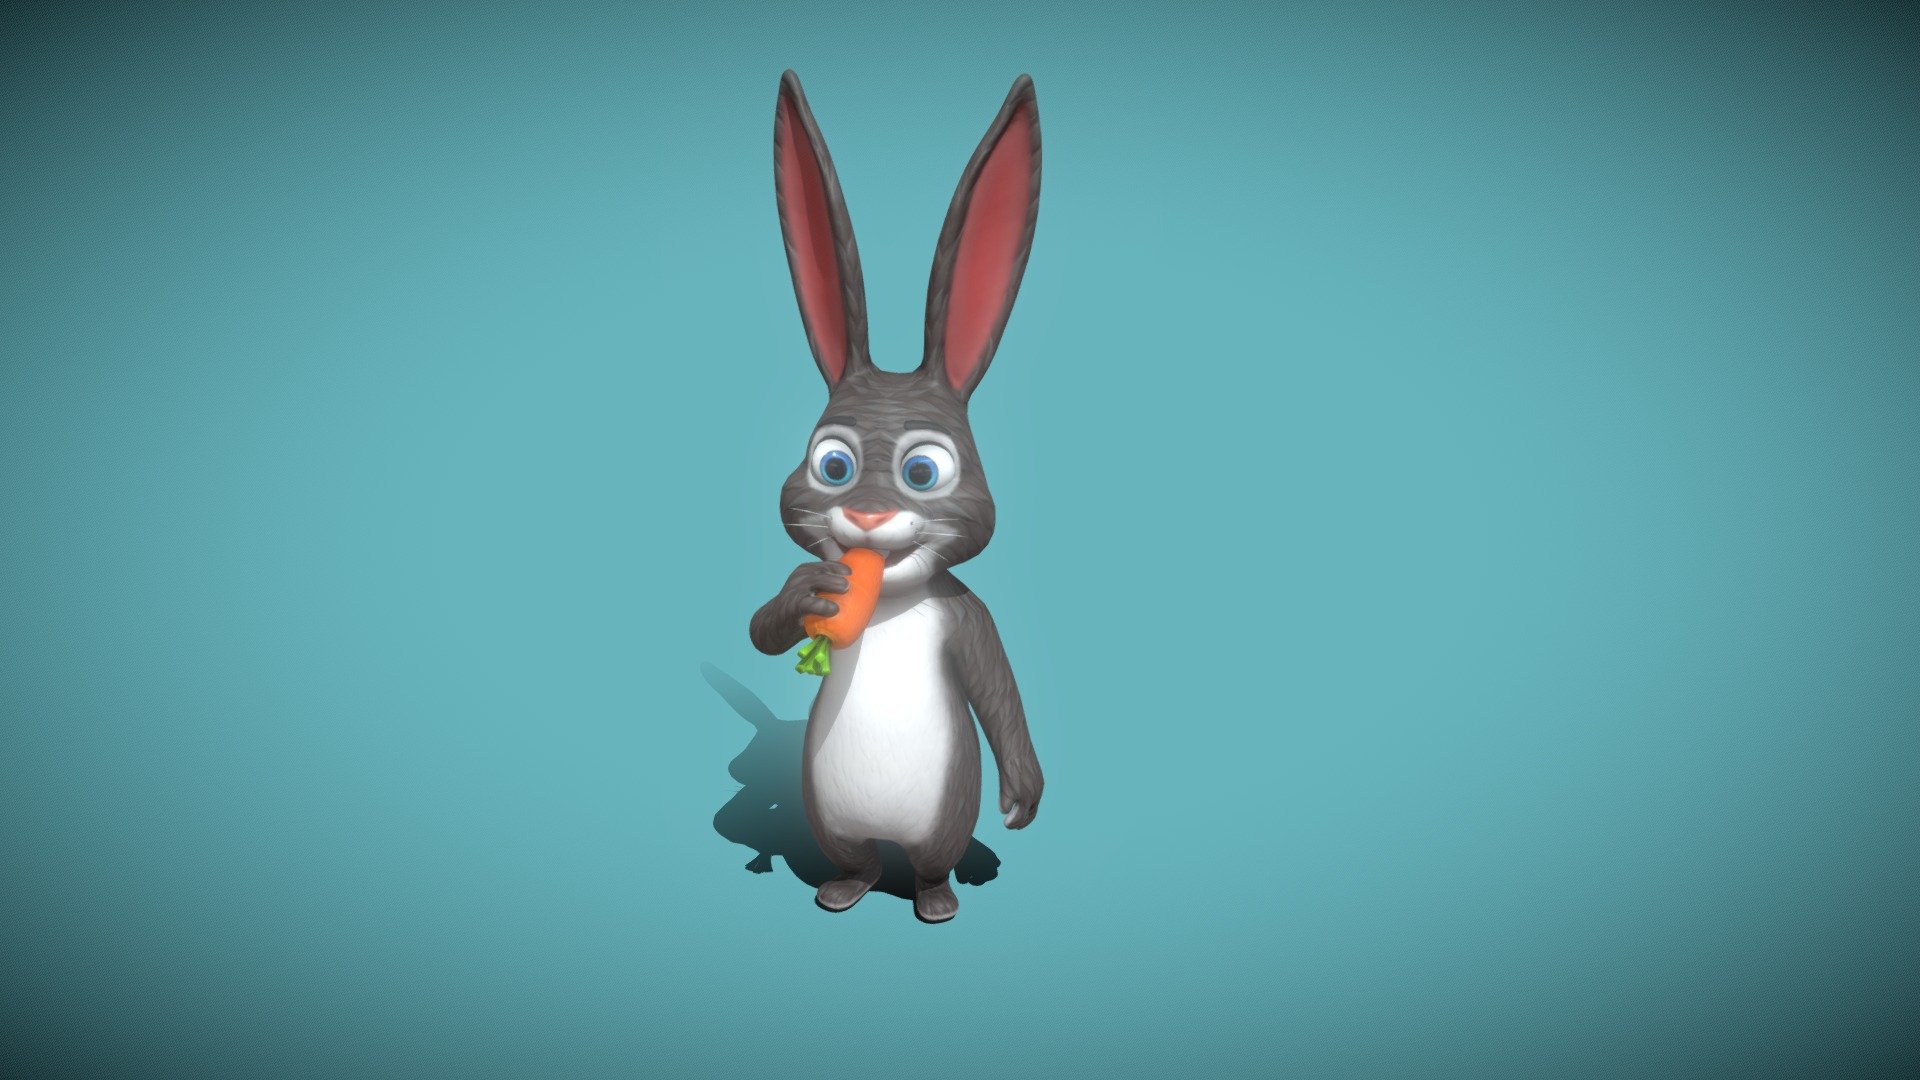 ArtStation - Cartoon Rabbit Animated 3D Model